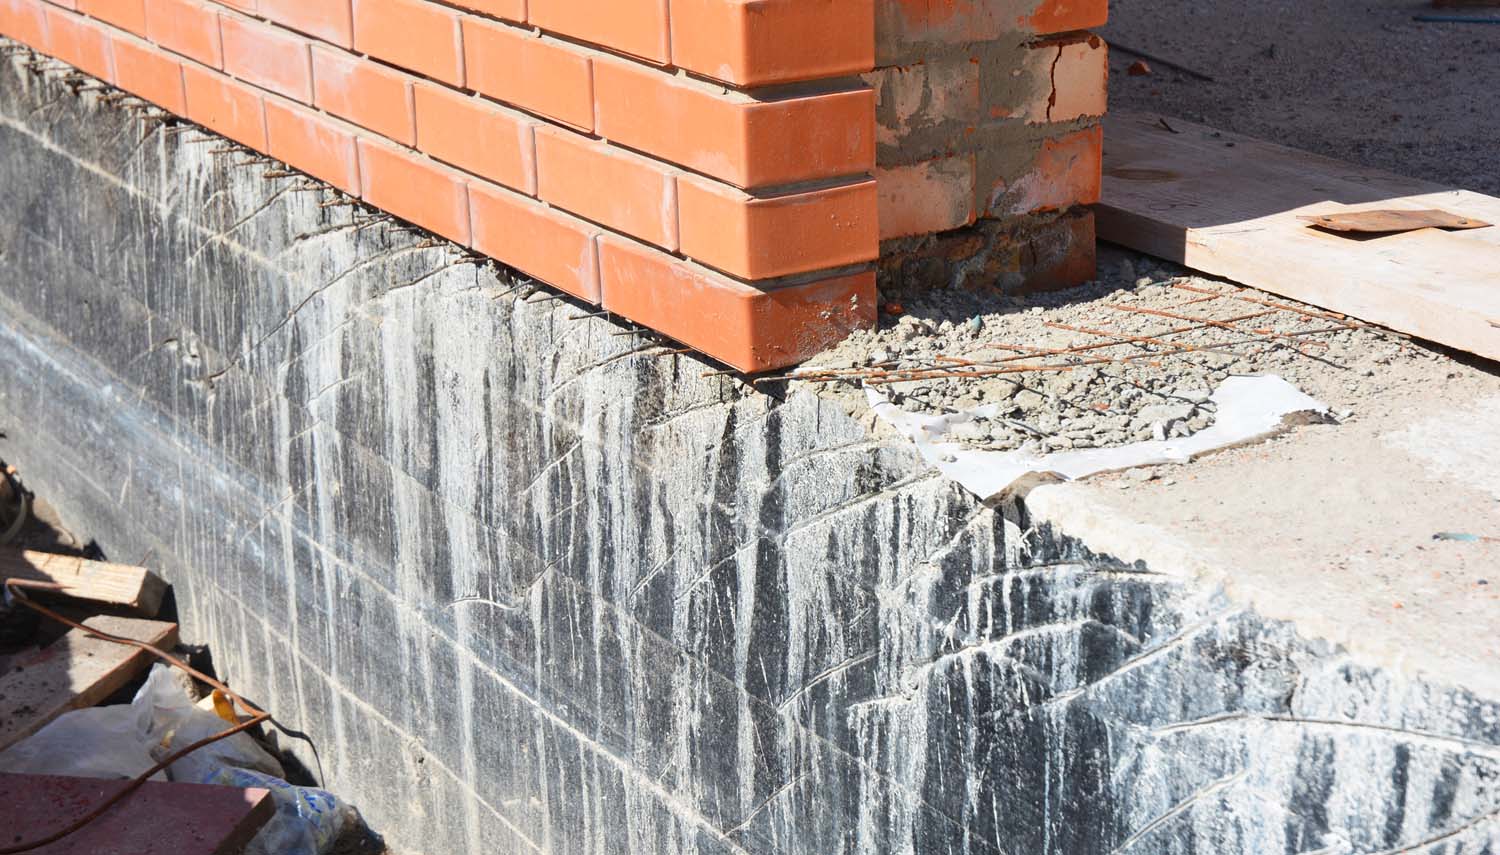 foundation with bricks that needs repairing